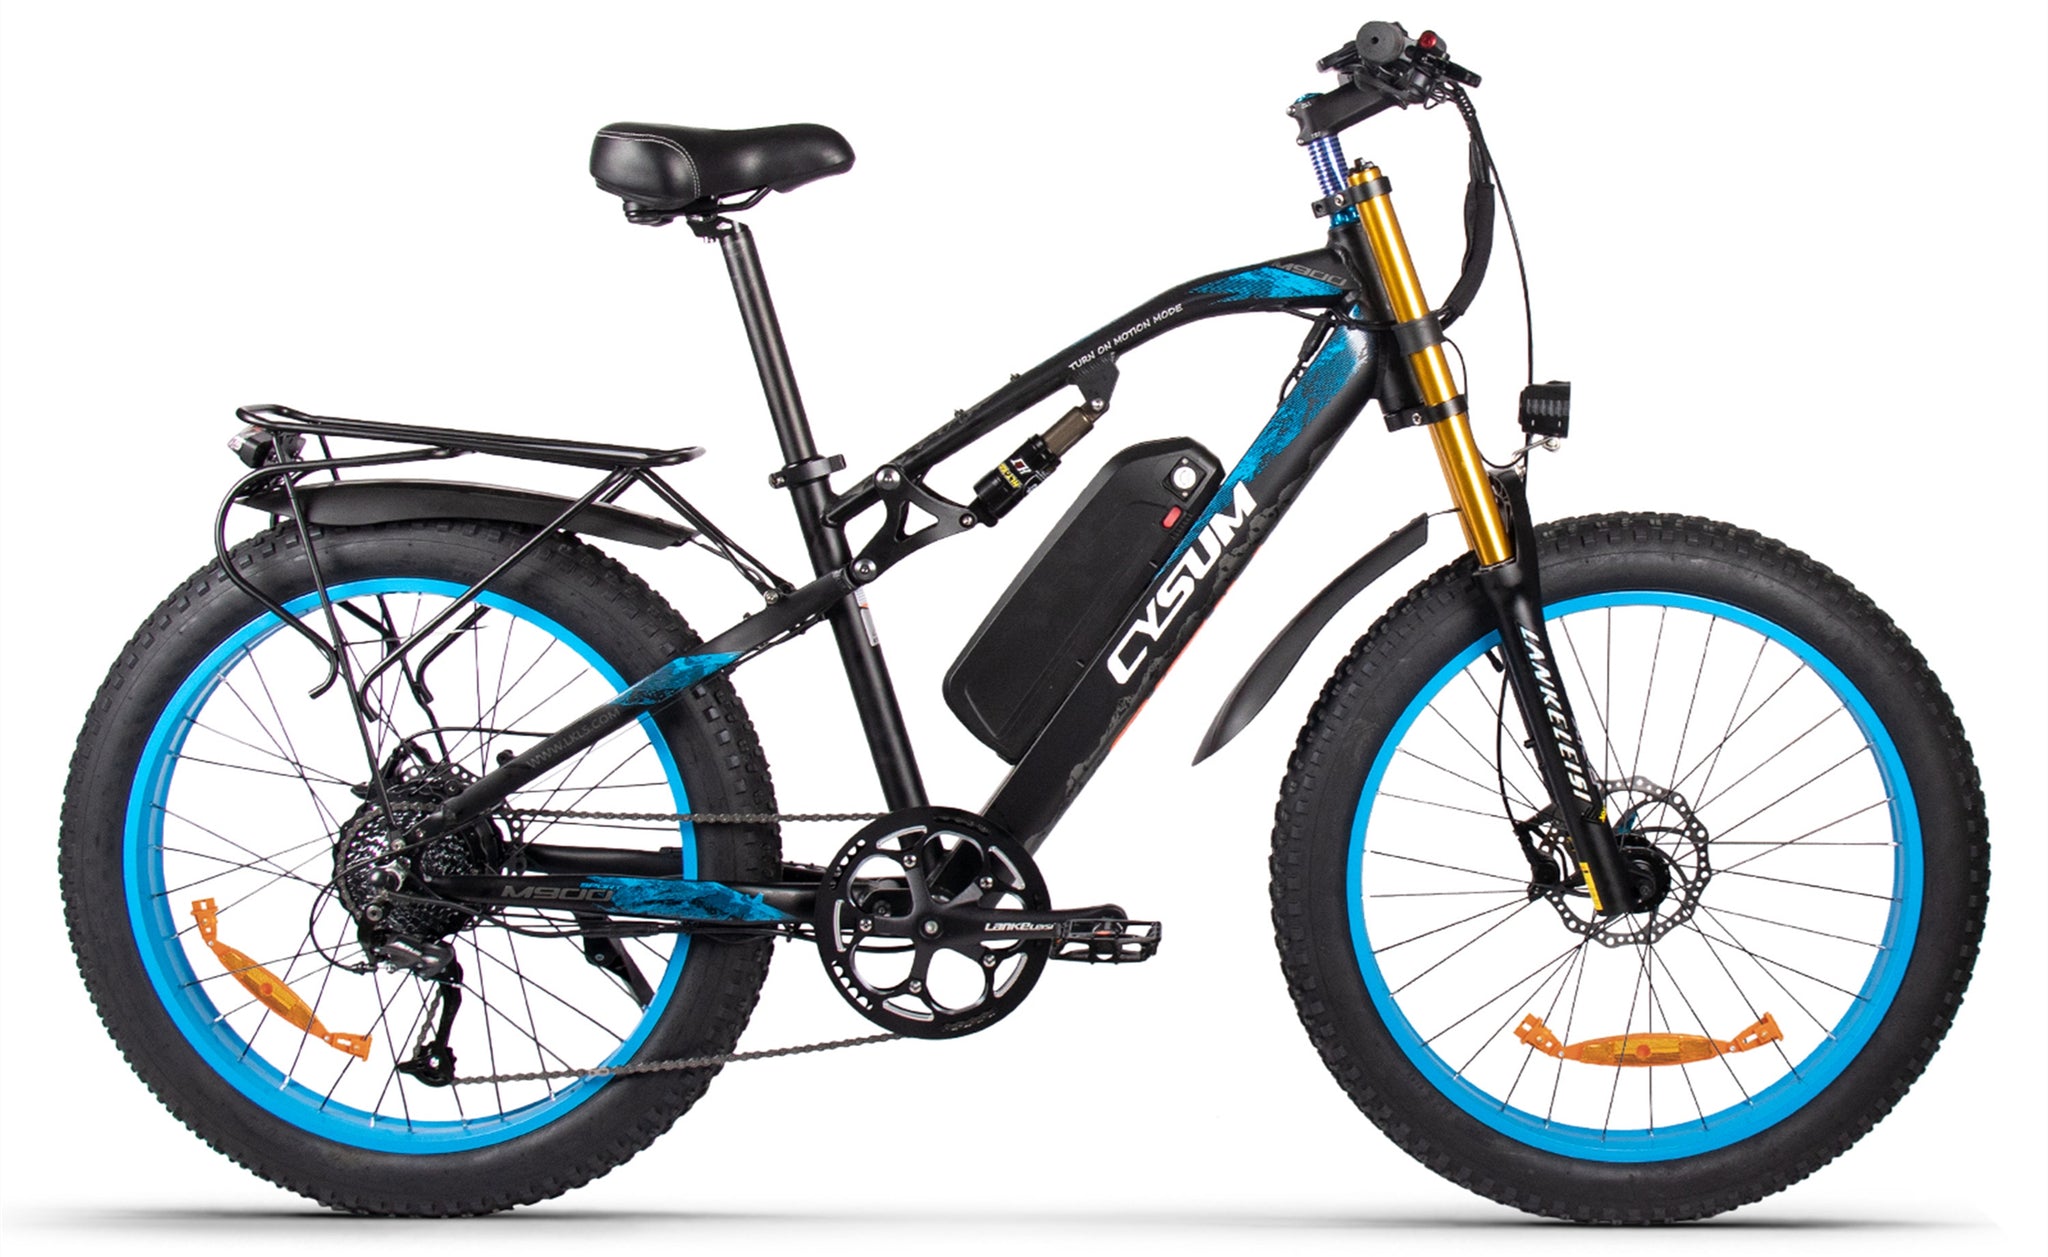 M900 PLUS  816Wh 48V Motor 17Ah Li-Battery Fat E-Bike bicycle